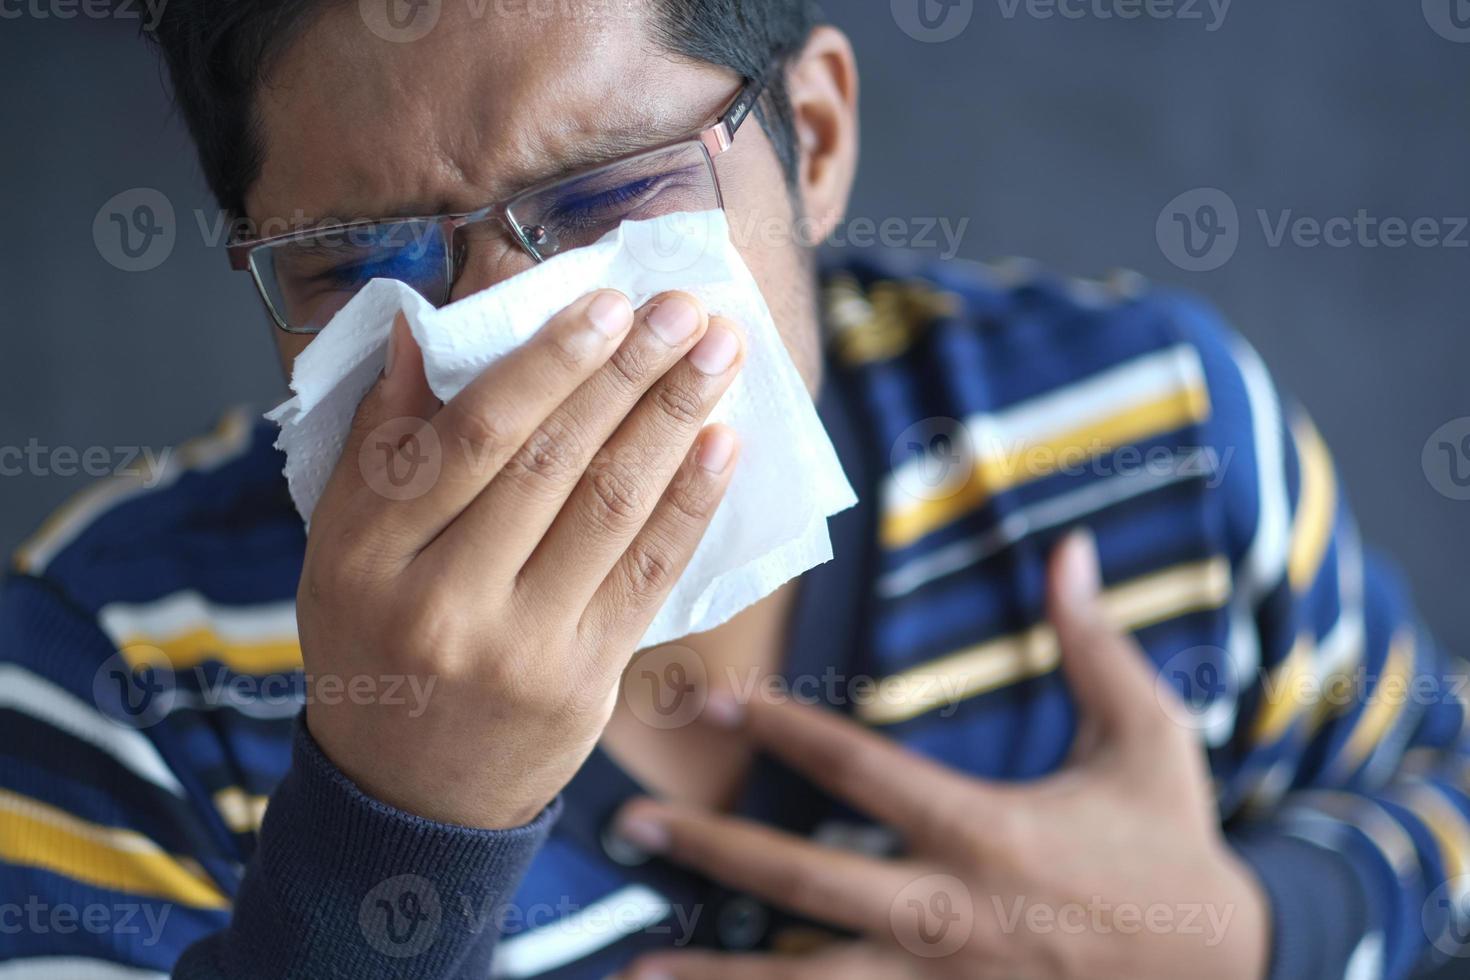 enfermo con gripe sonarse la nariz con una servilleta. foto